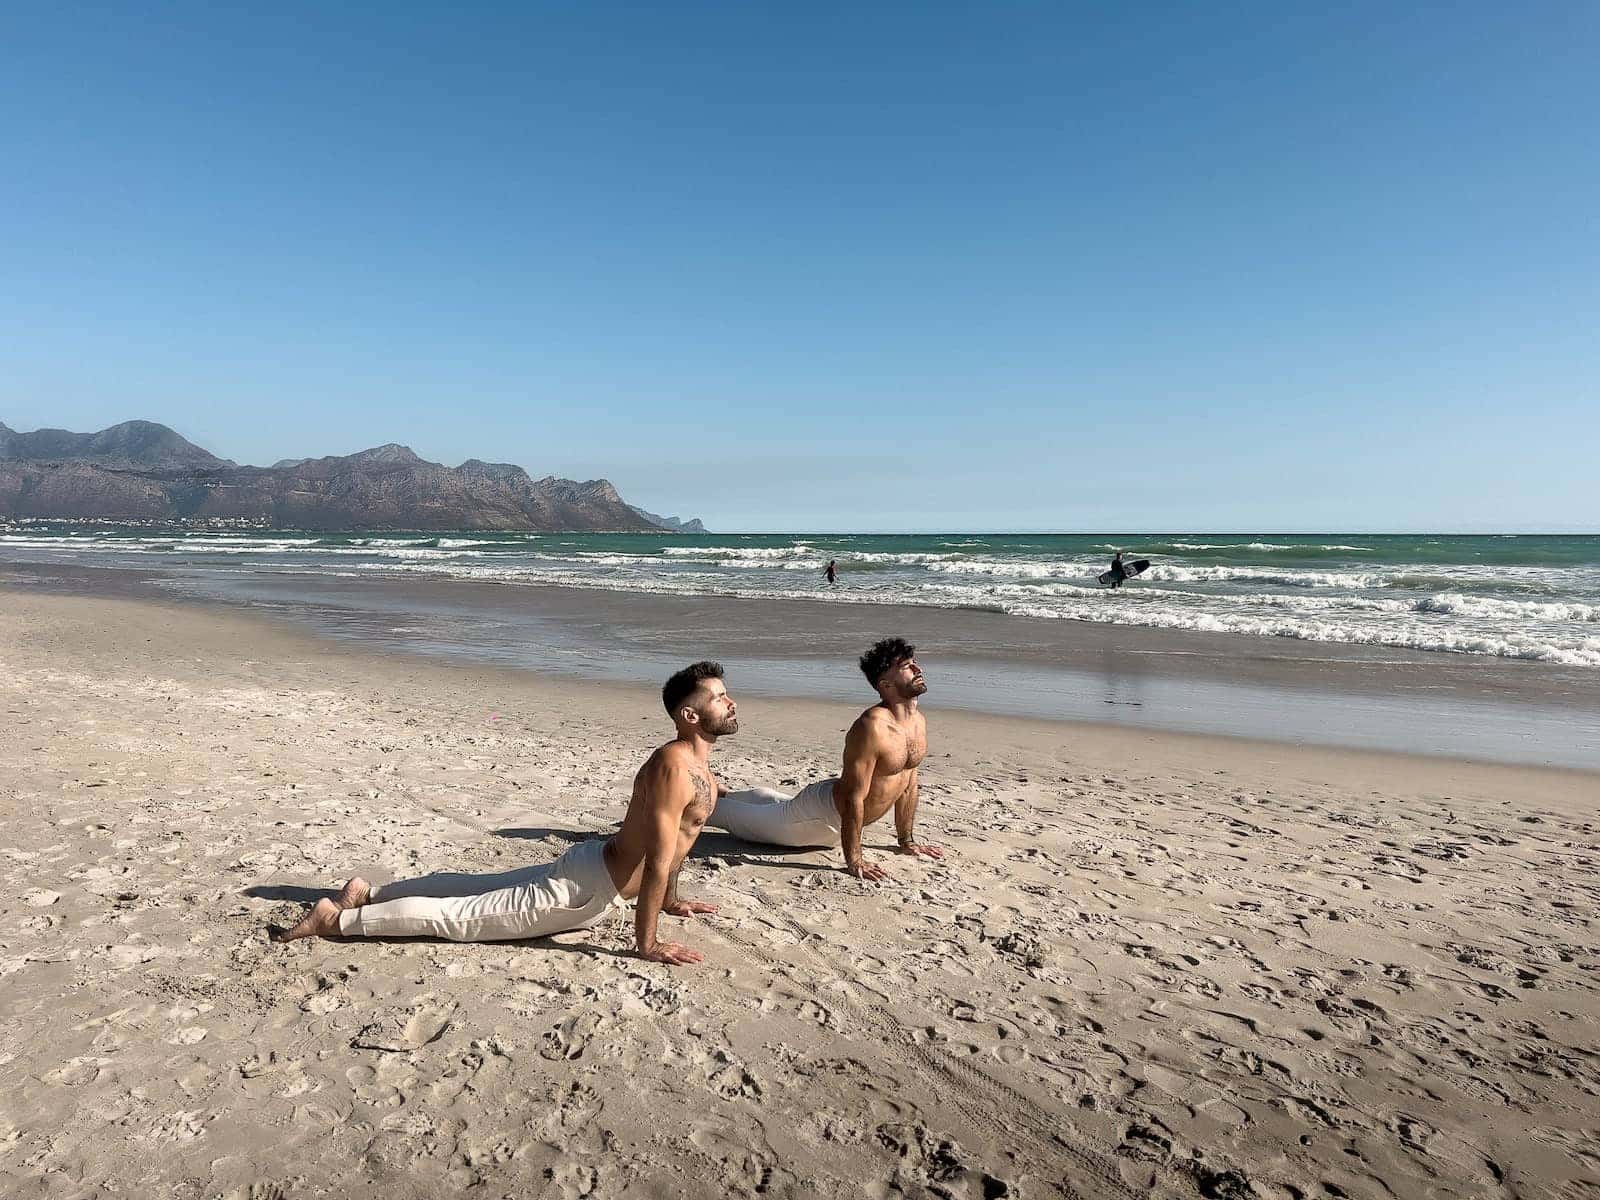 Gay couple doing an upward dog yoga pose on the beach.